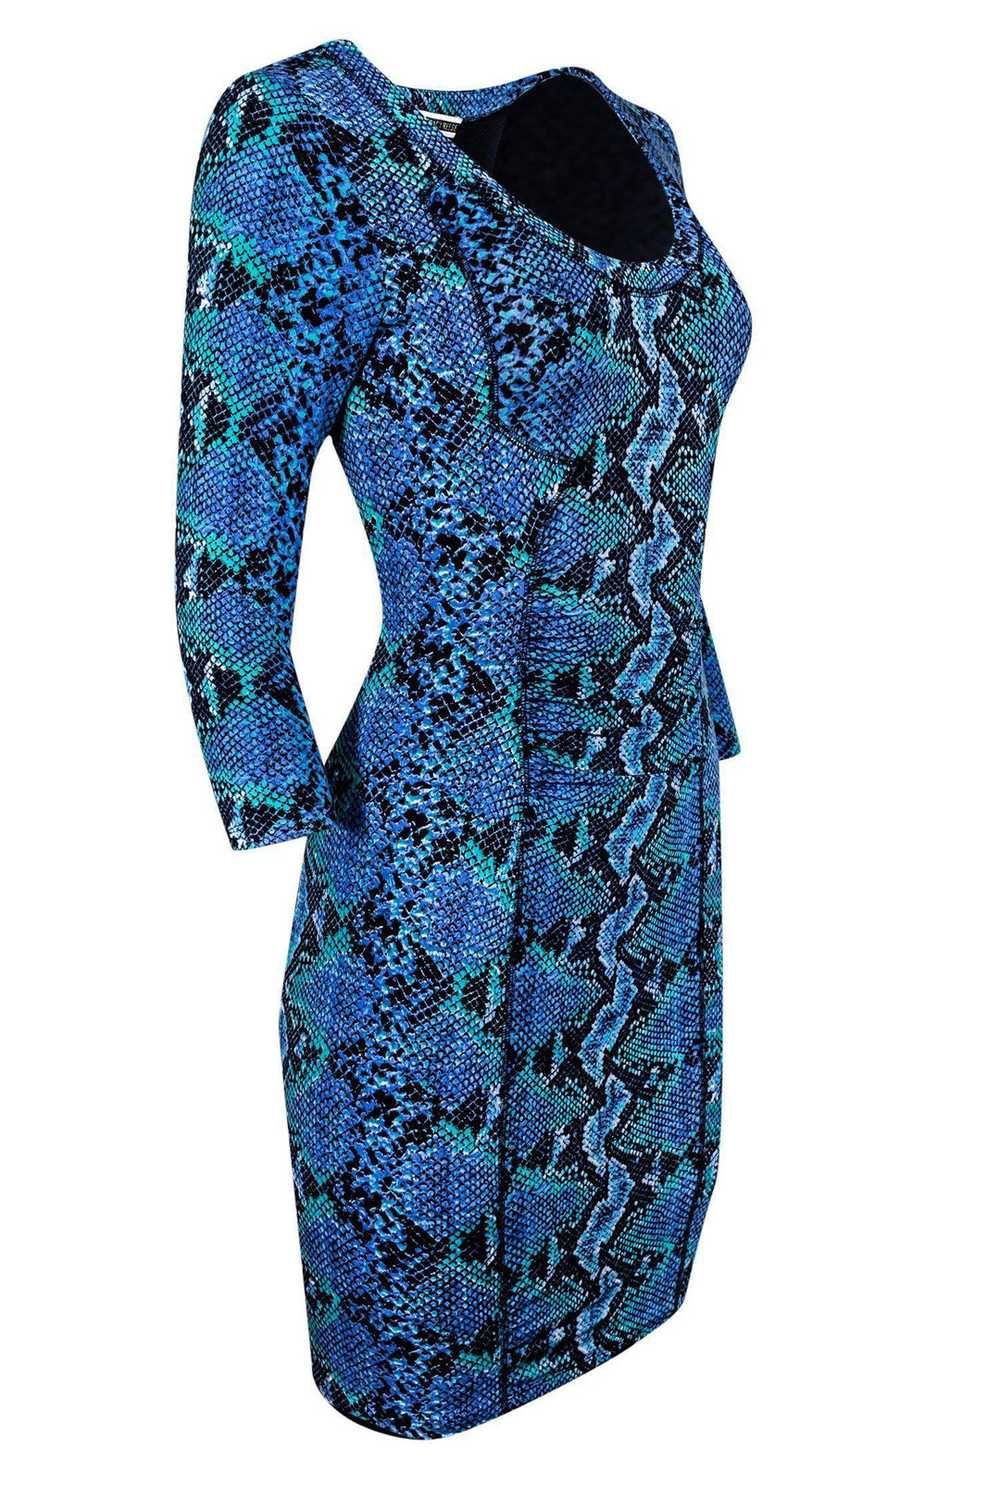 Tracy Reese - Blue & Teal Snake Print Dress Sz S - image 2